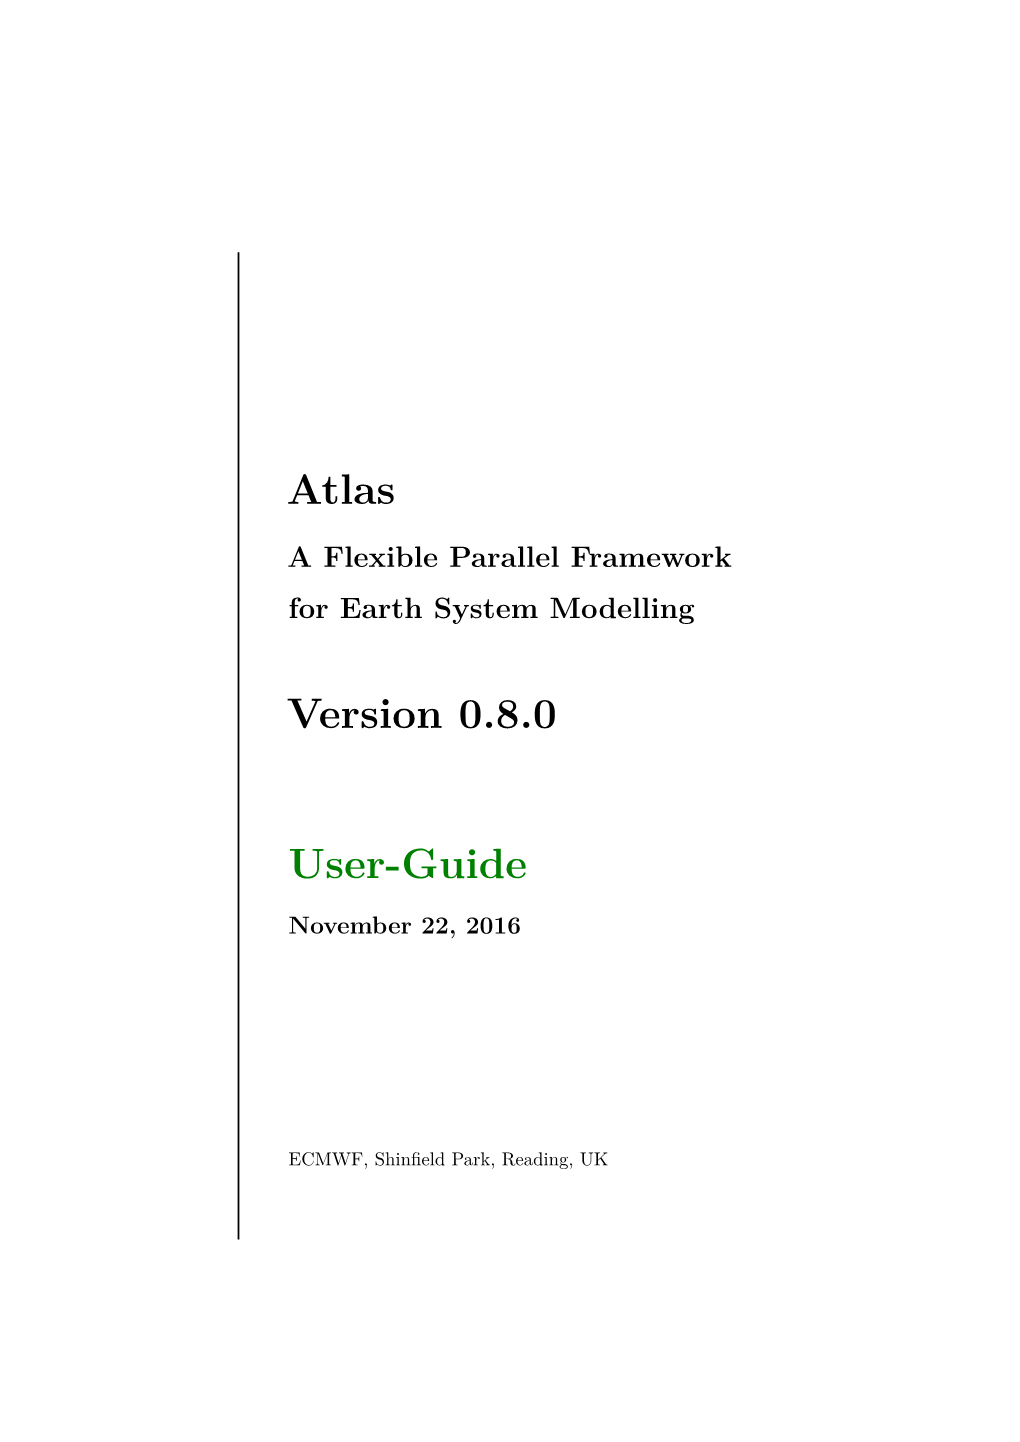 Atlas Version 0.8.0 User-Guide